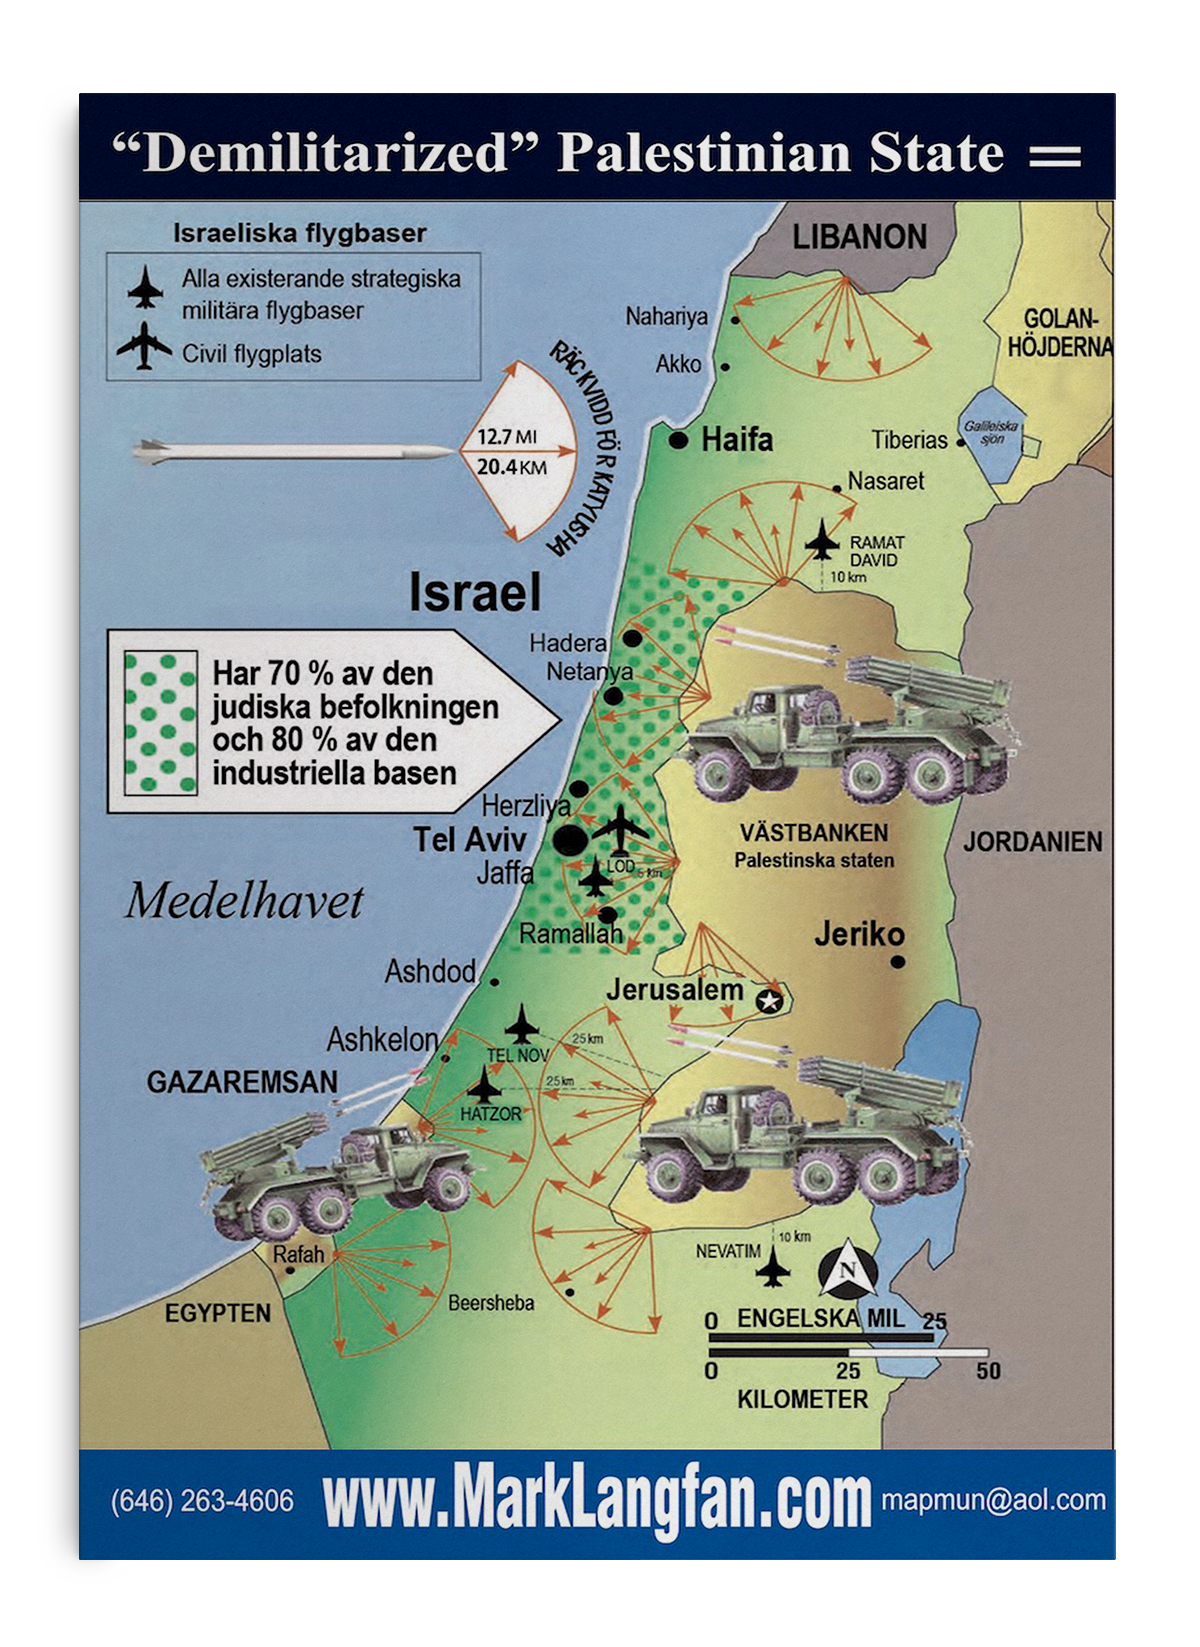 demilitarized palestinian state swedish